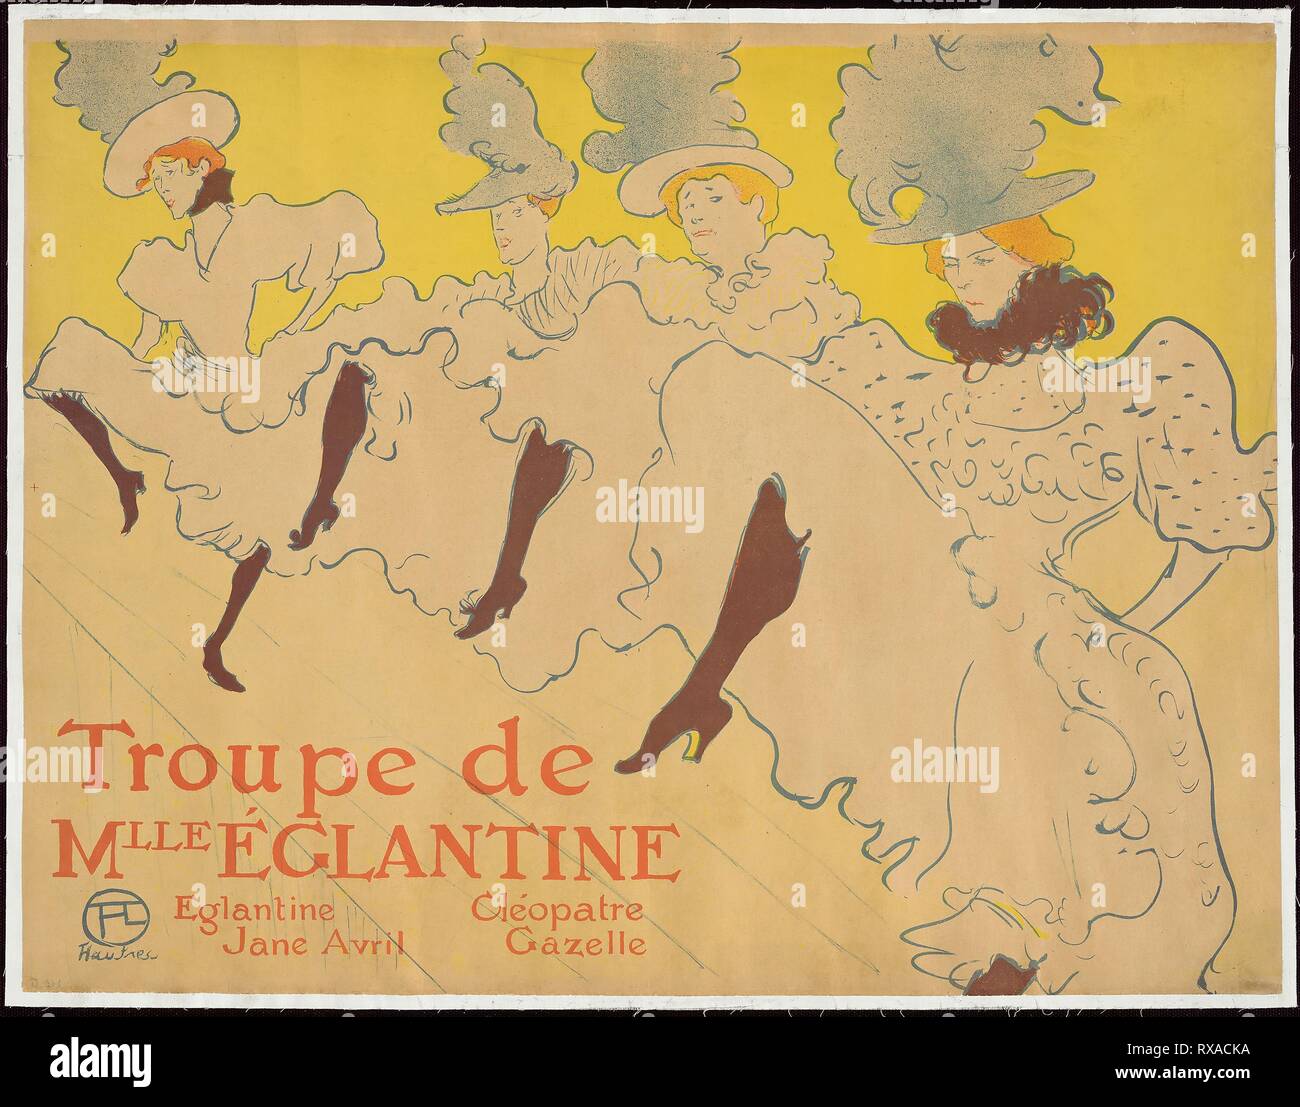 Mademoiselle Eglantine's Troupe. Henri de Toulouse-Lautrec; French, 1864-1901. Date: 1896. Dimensions: 614 × 795 mm (image); 620 × 799 mm (sheet). Color lithograph on tan wove paper. Origin: France. Museum: The Chicago Art Institute. Stock Photo